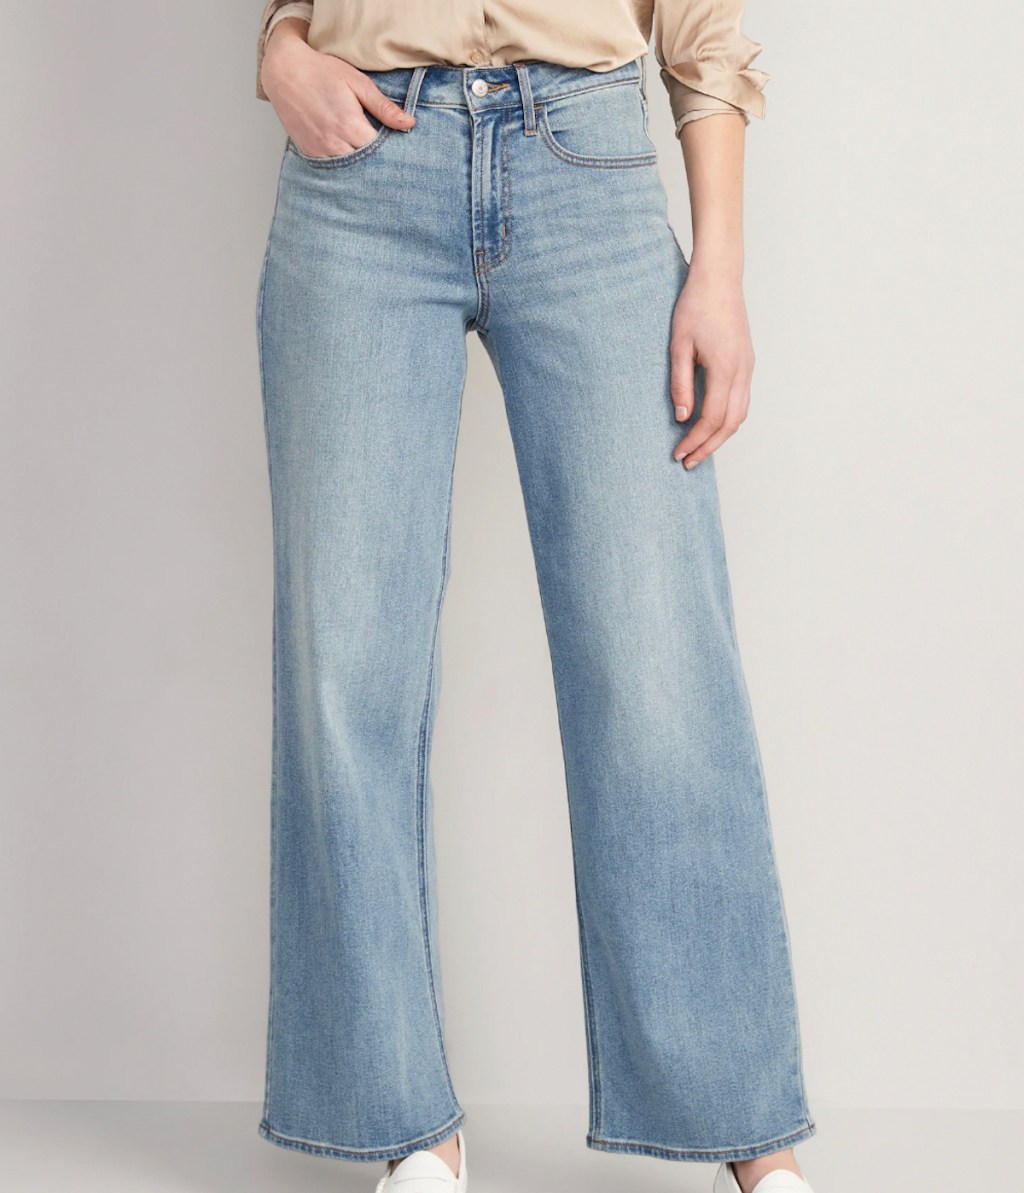 anthropologie clothes stock photo of model posing in medium wash wide leg denim jeans